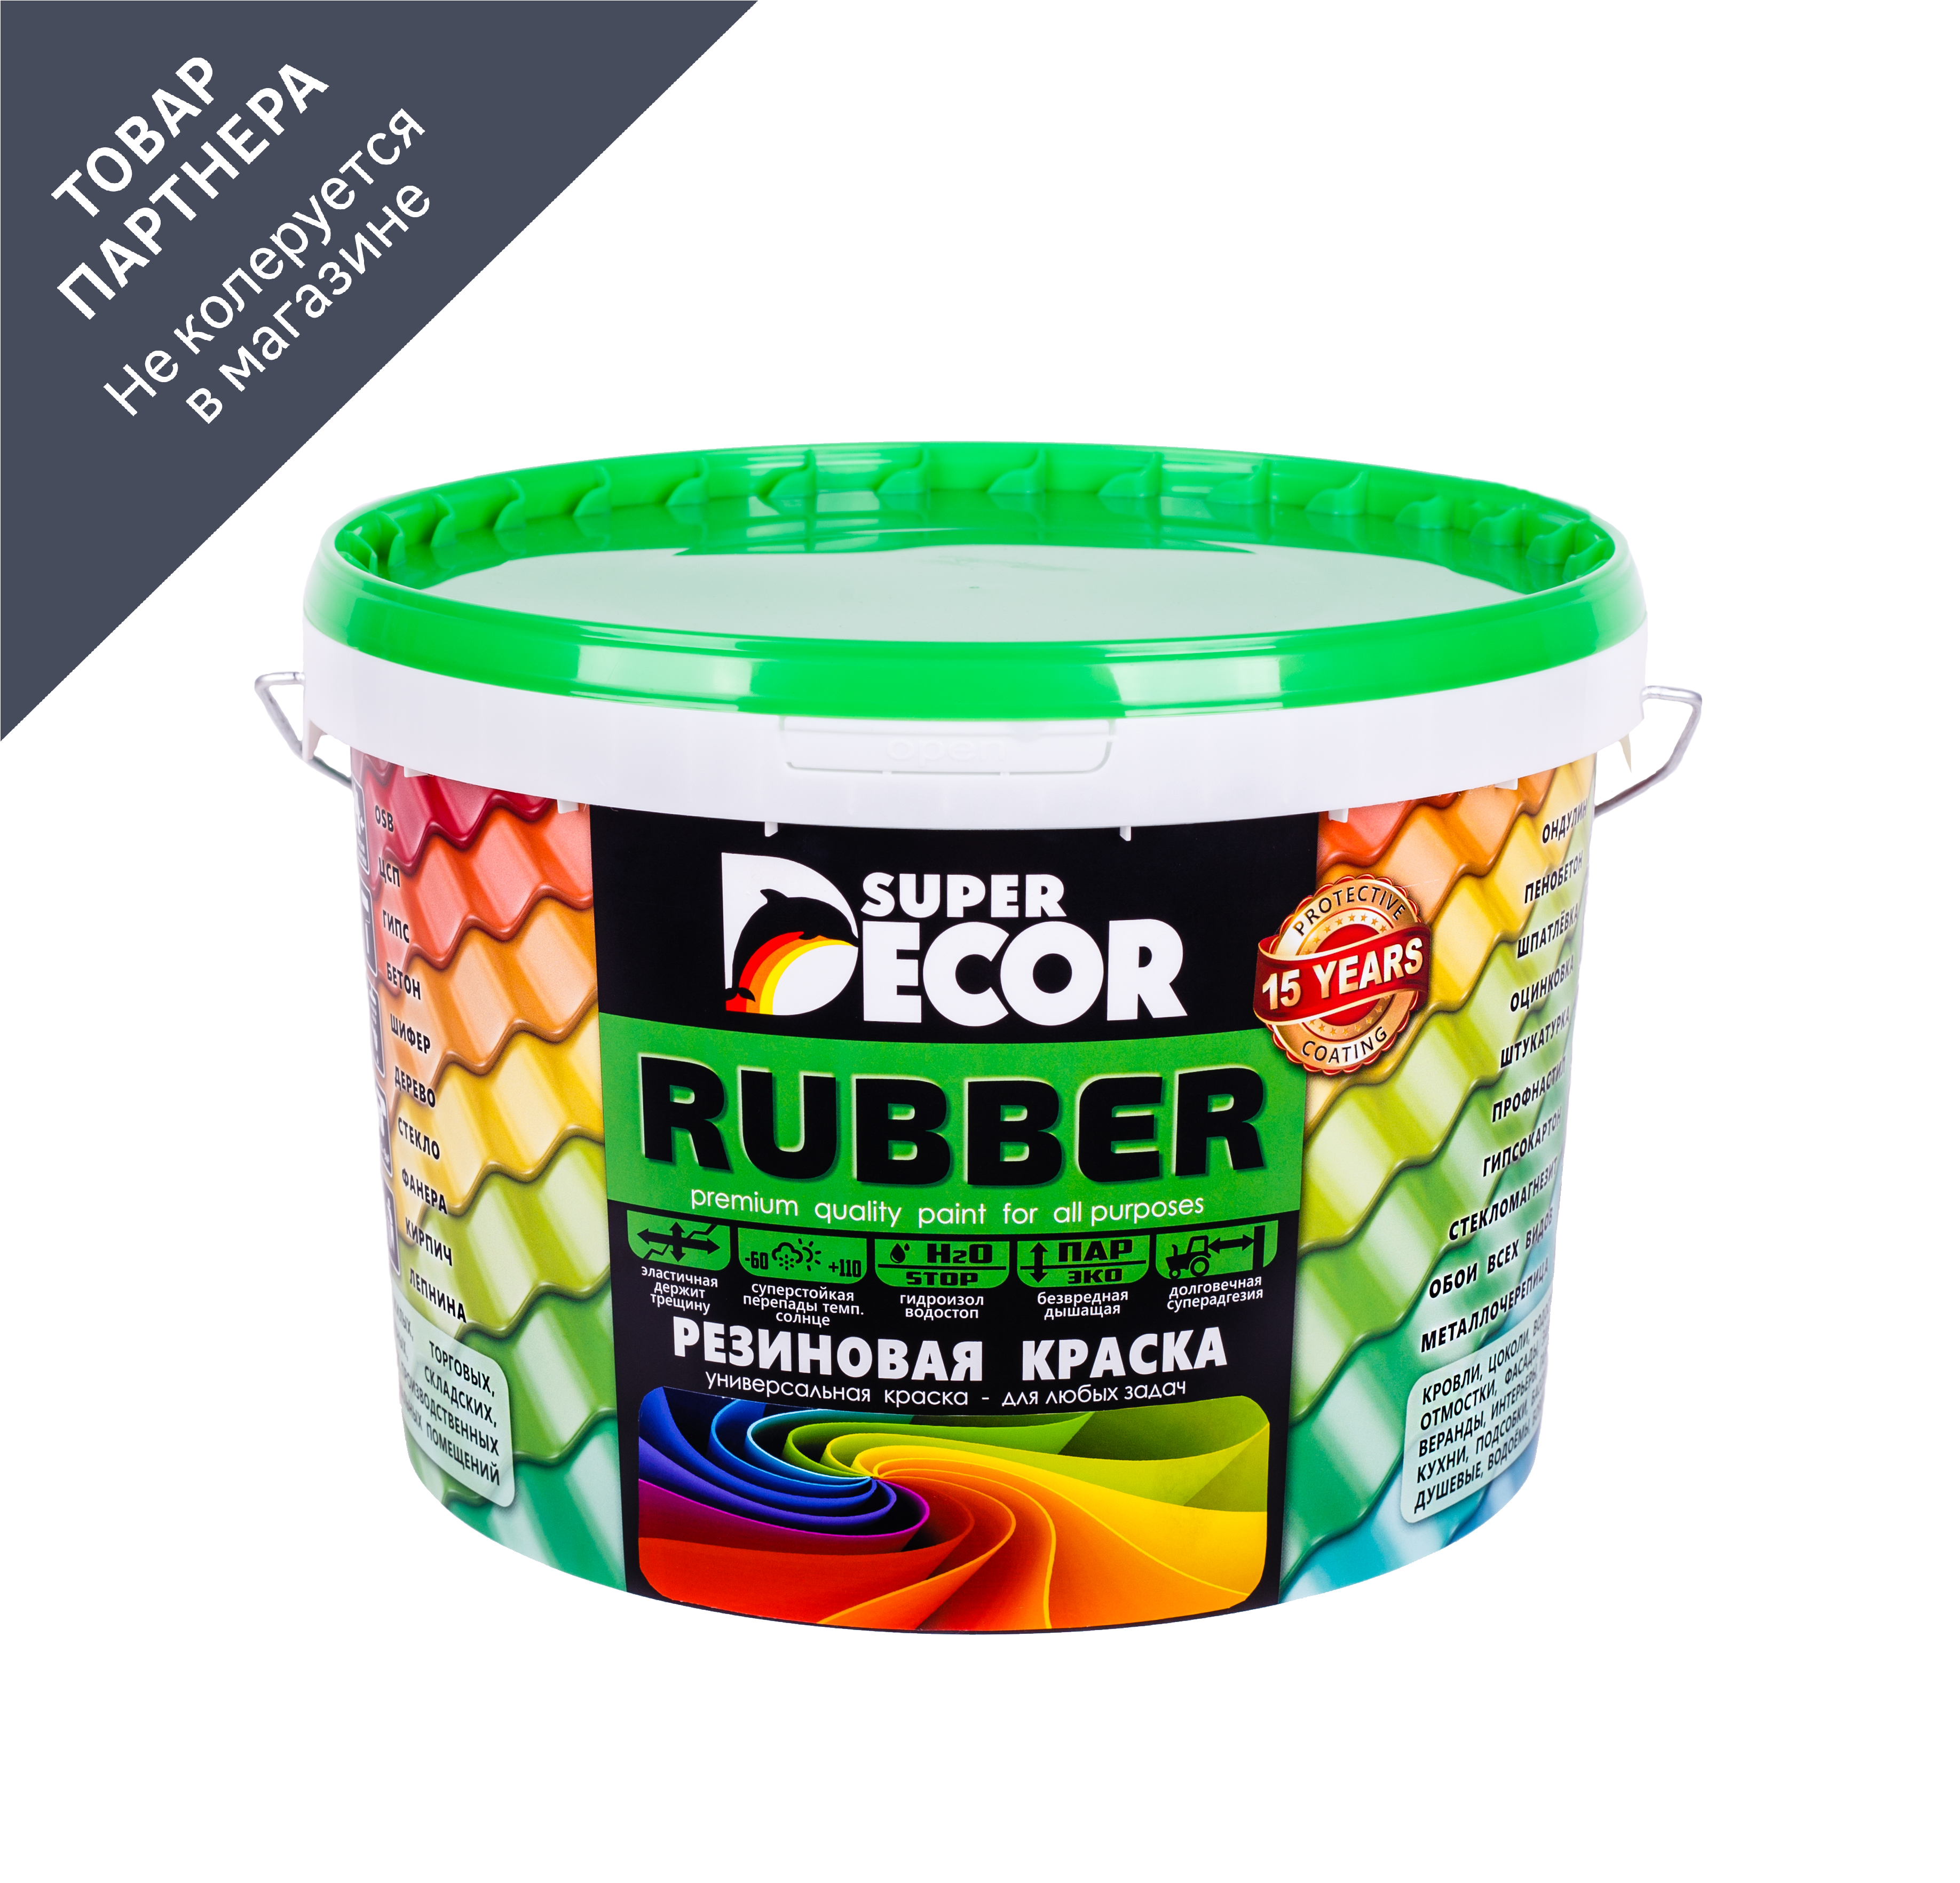 90174518 Краска резиновая Rubber цвет № 20 Фисташка 3 кг STLM-0123580 SUPER DECOR